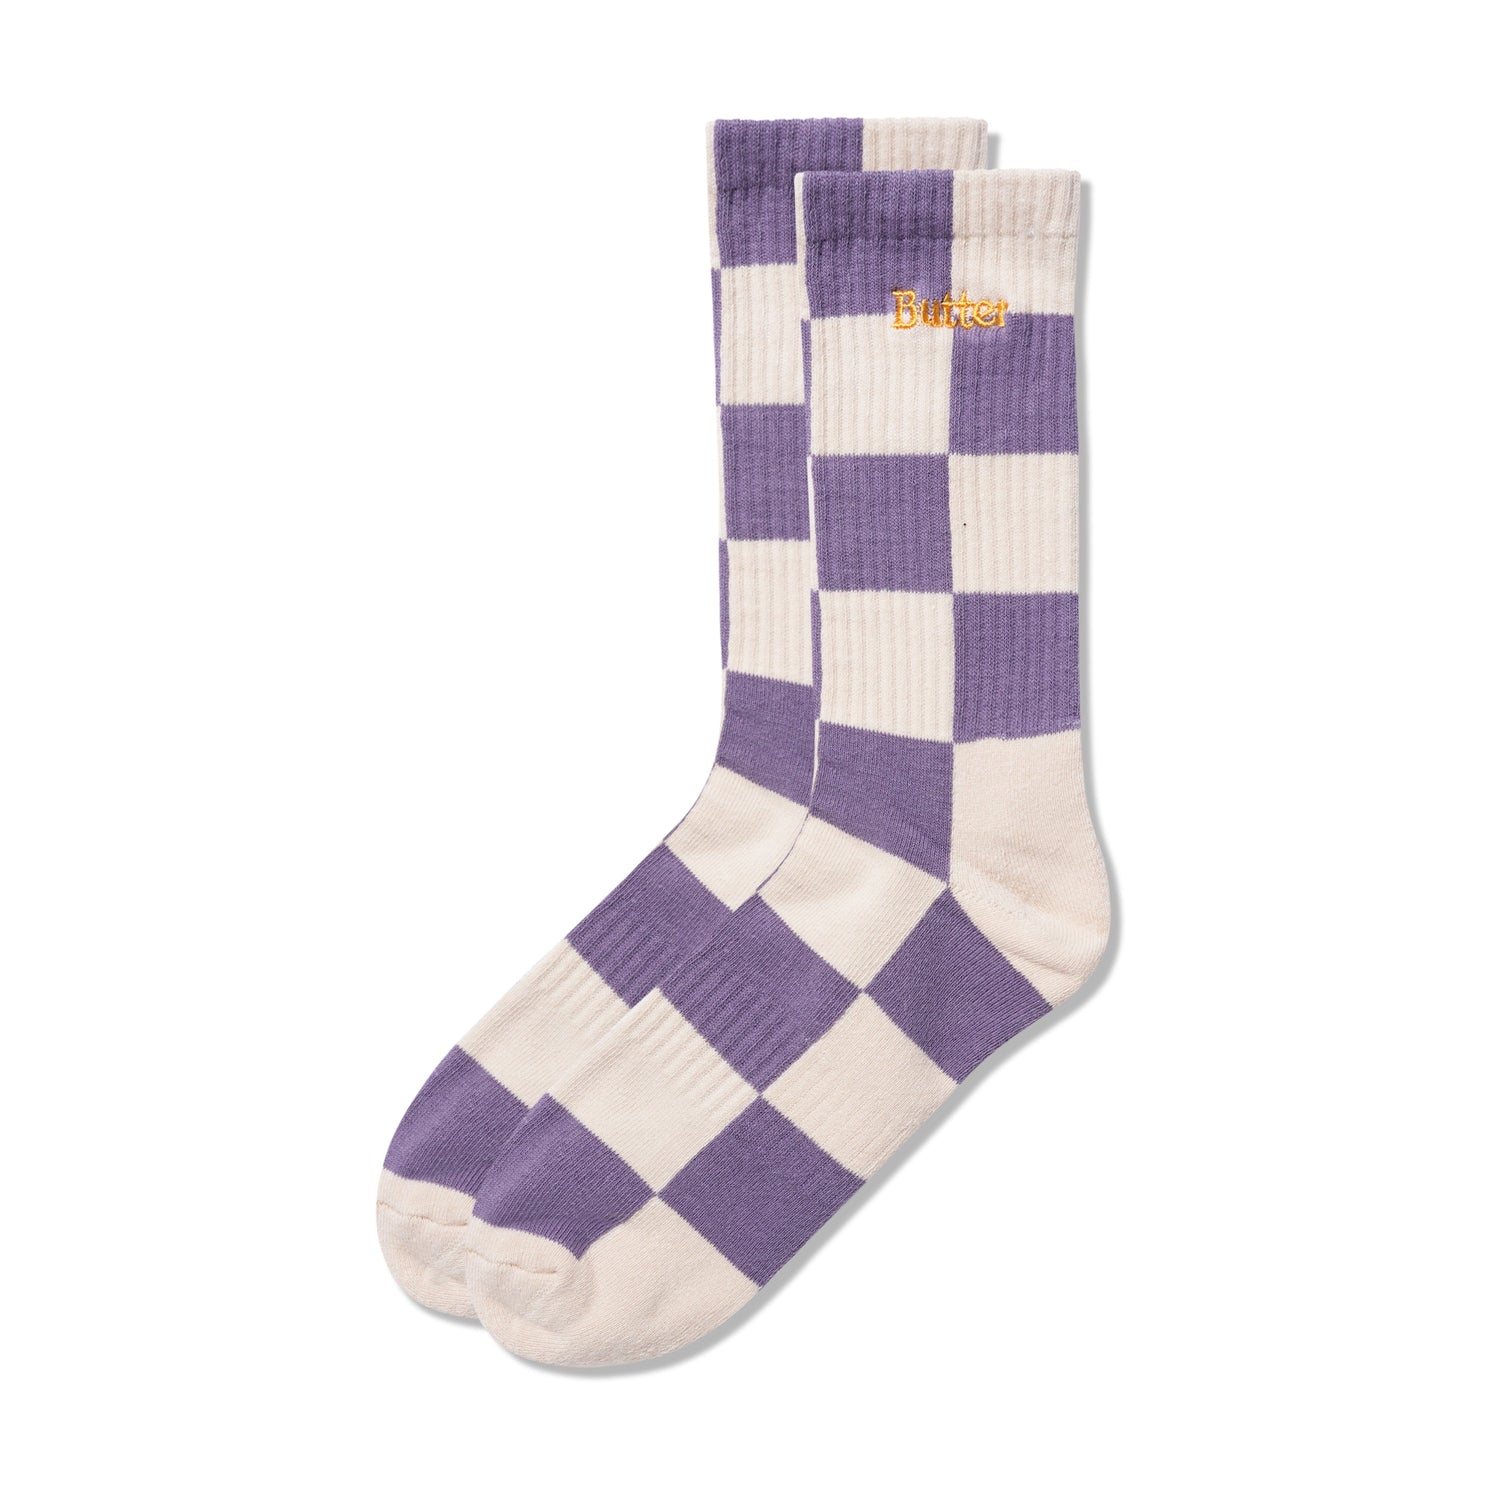 Checkered Socks, Cream / Lavender